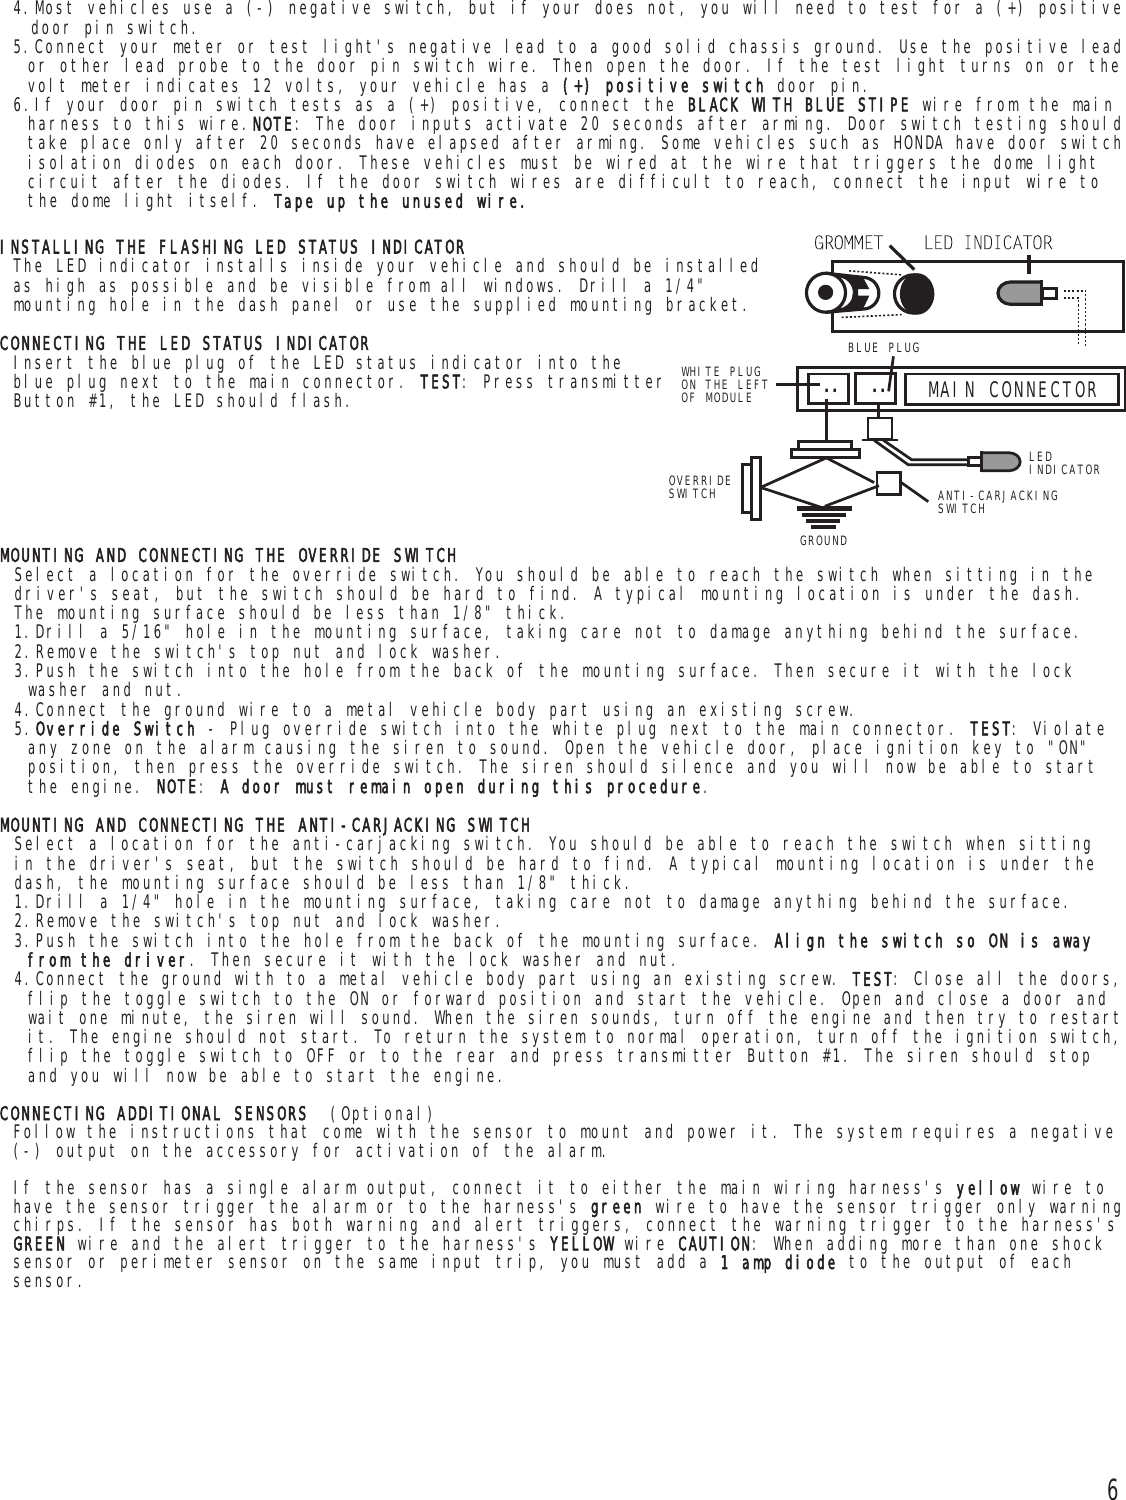 Page 7 of 12 - Bulldog-Security Bulldog-Security-Pro-Series-7002-Users-Manual-  Bulldog-security-pro-series-7002-users-manual